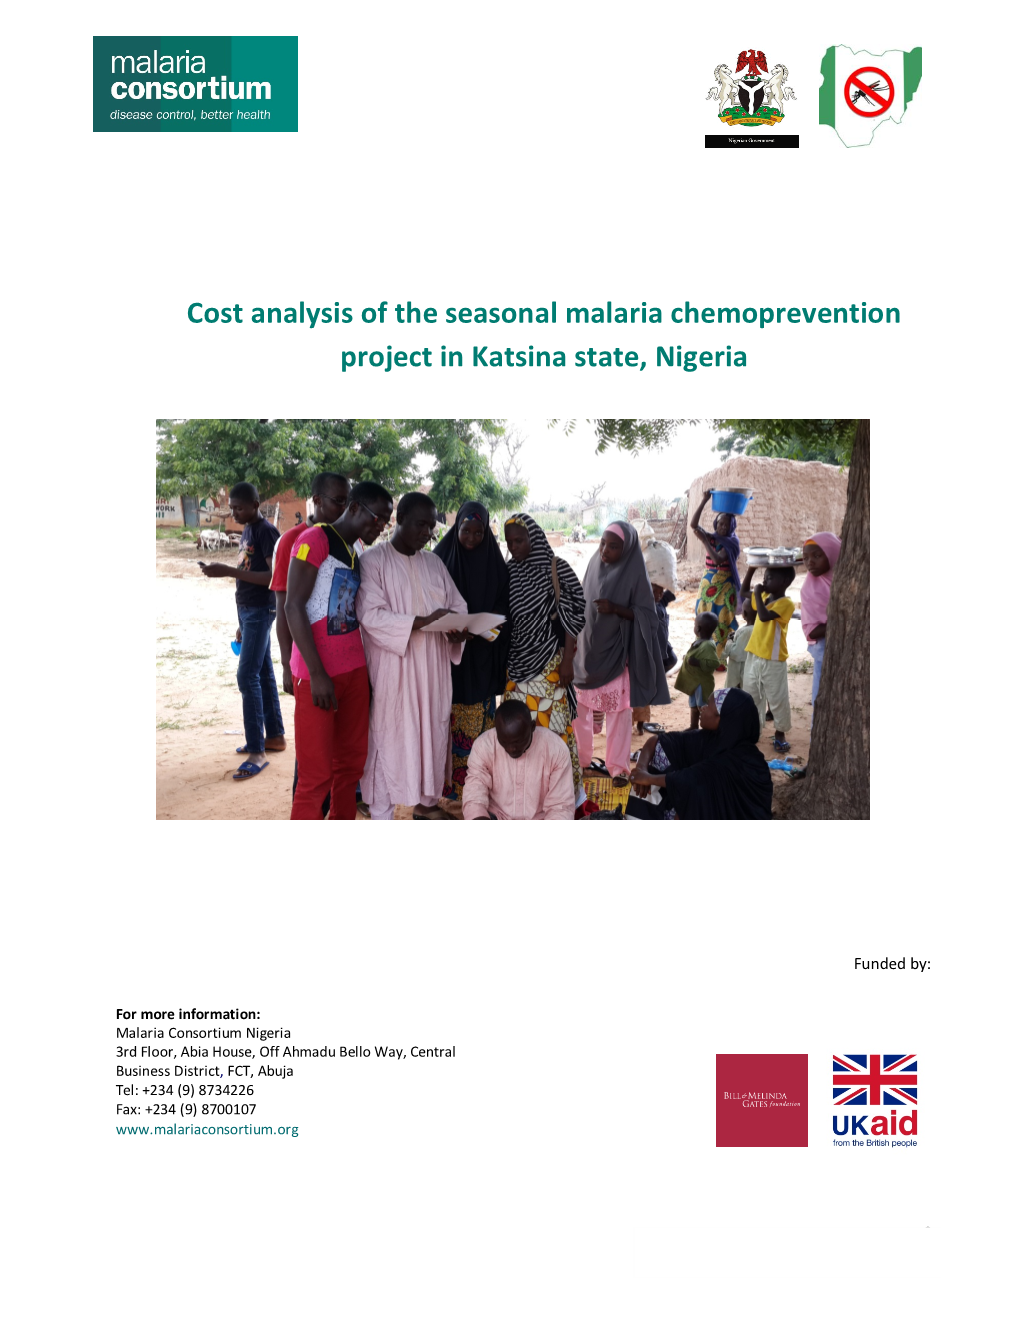 Cost Analysis of the Seasonal Malaria Chemoprevention Project in Katsina State, Nigeria